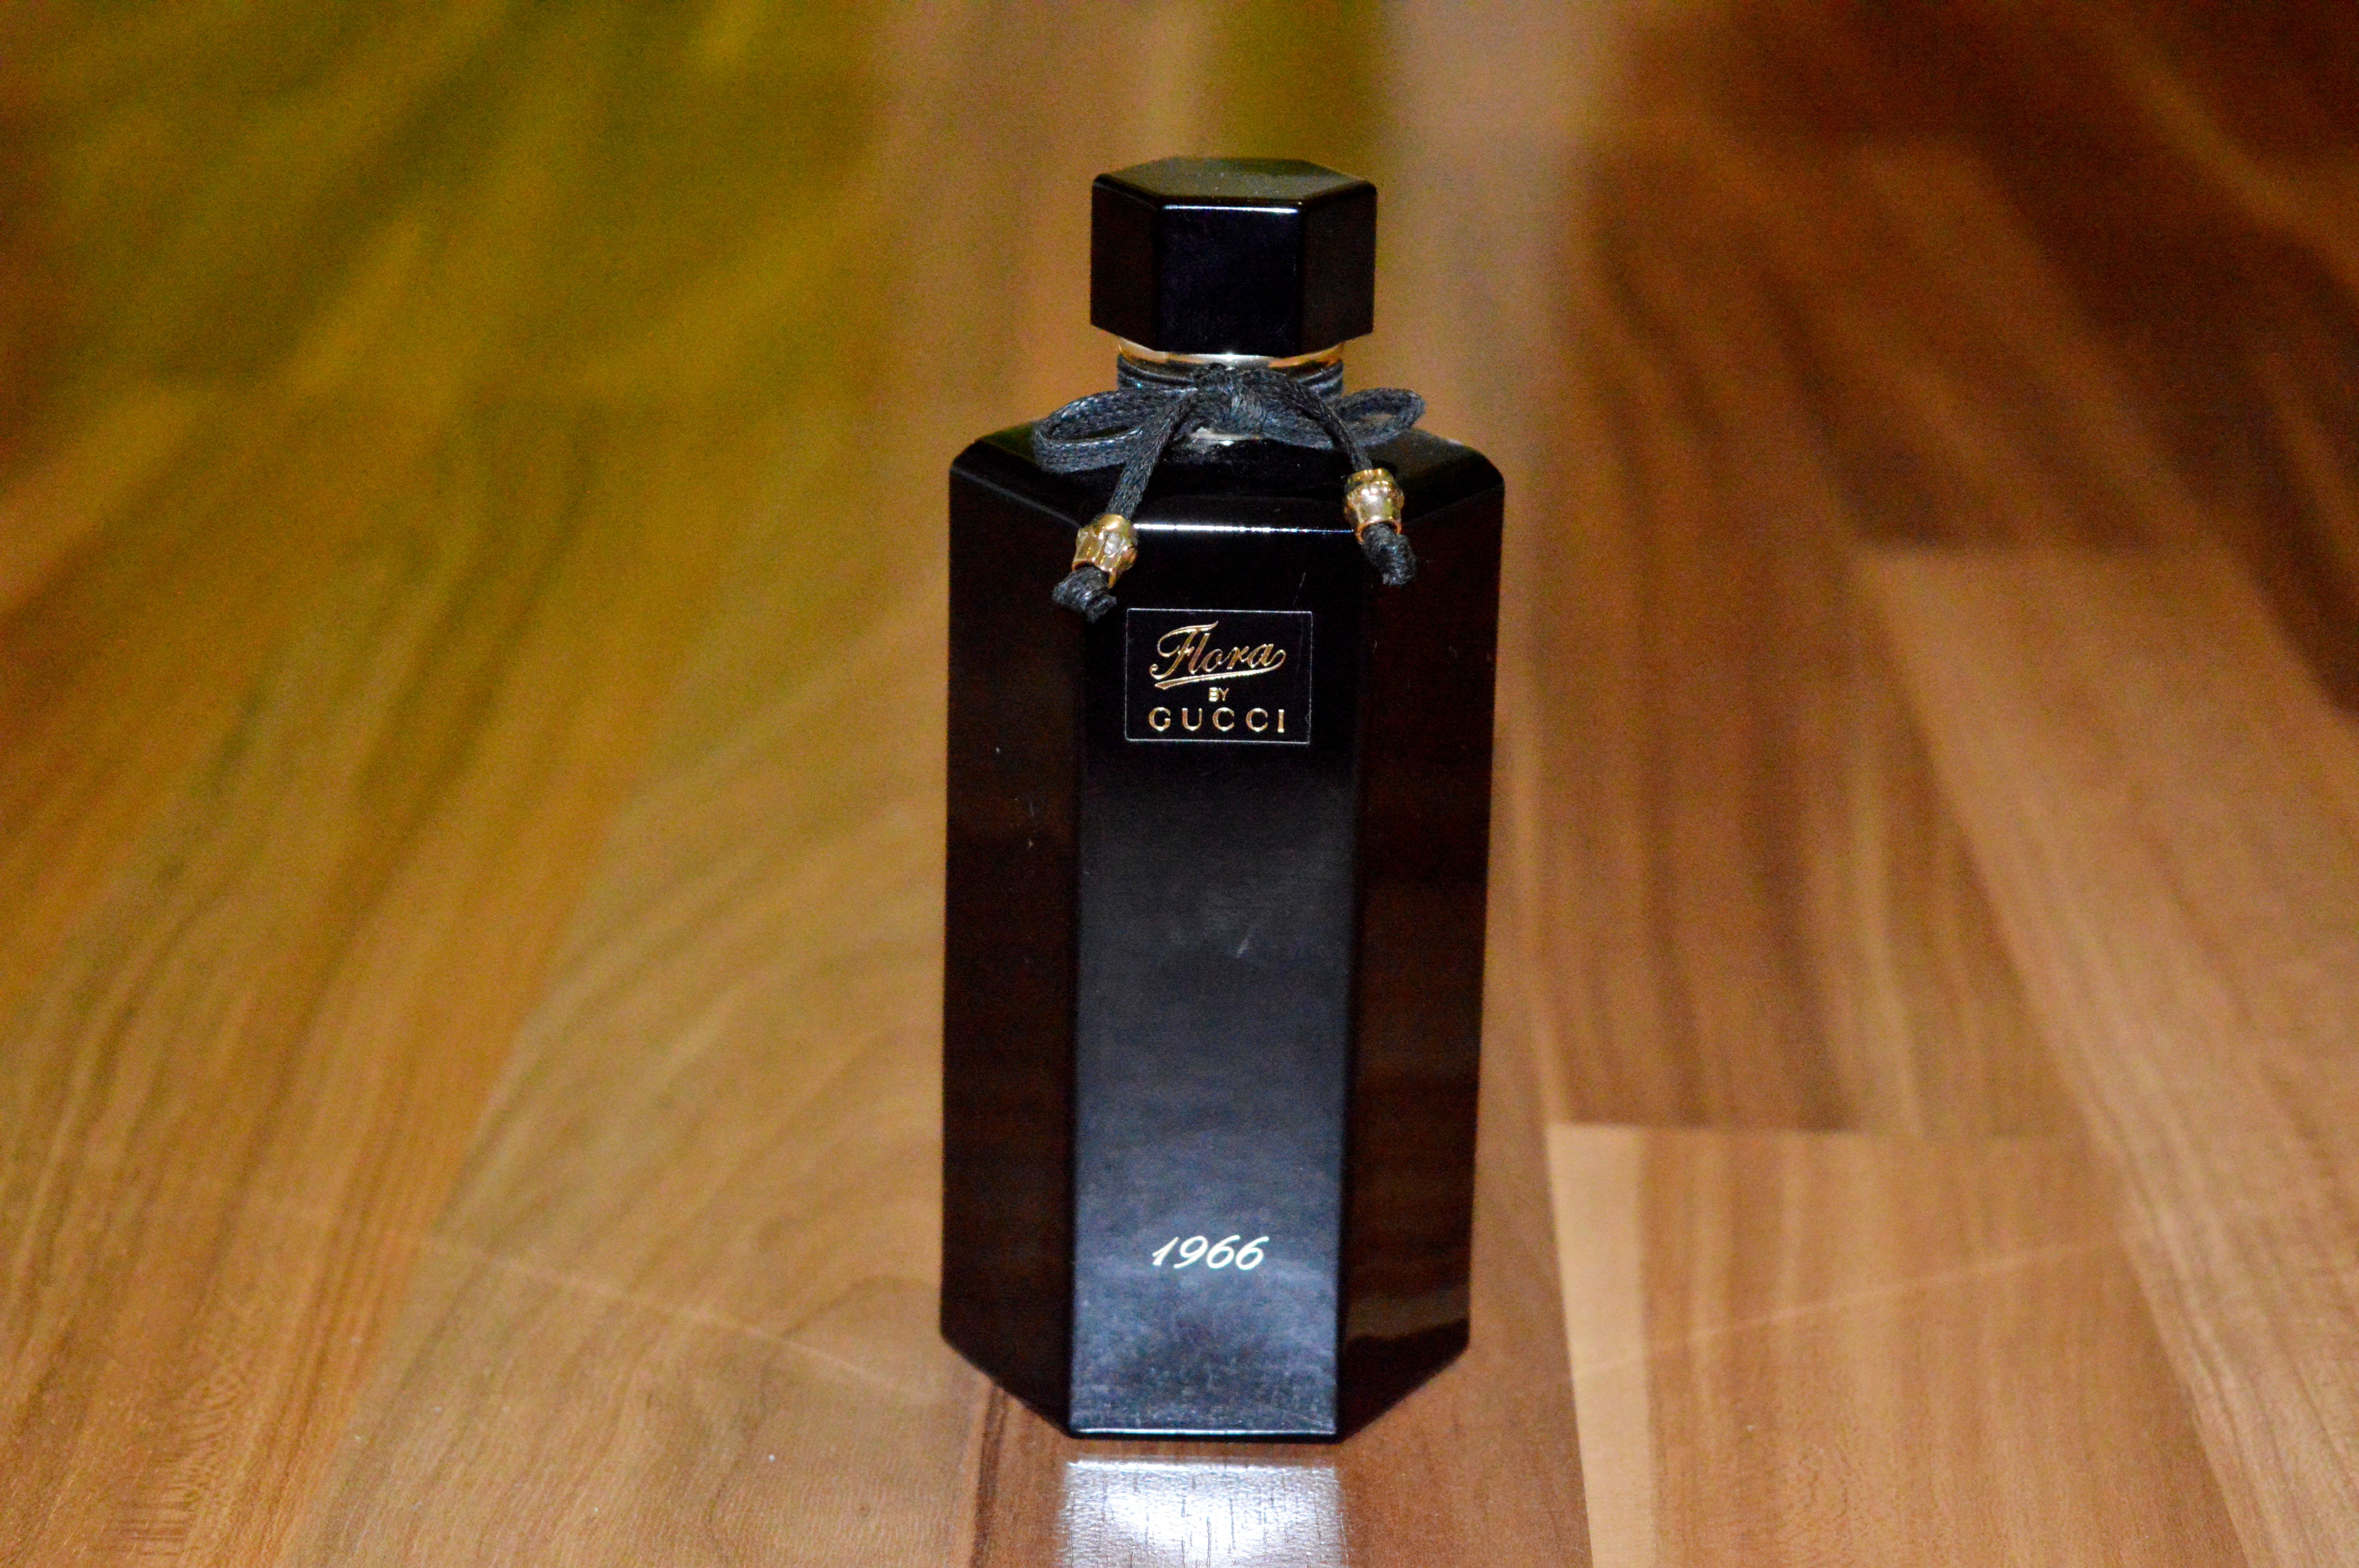 gucci 1966 perfume